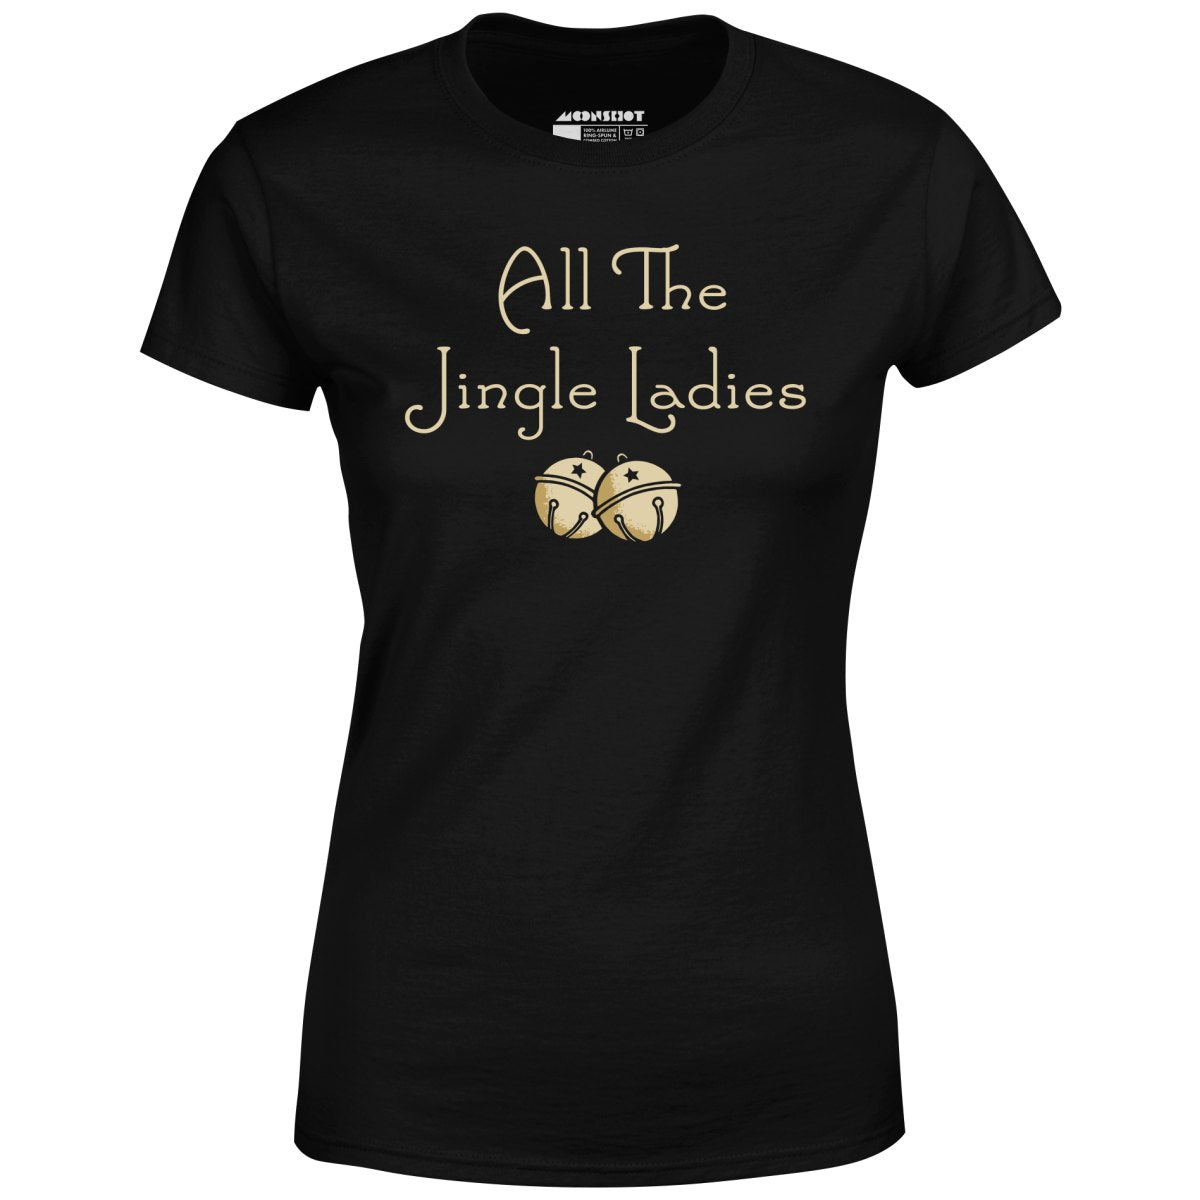 All The Jingle Ladies - Women's T-Shirt